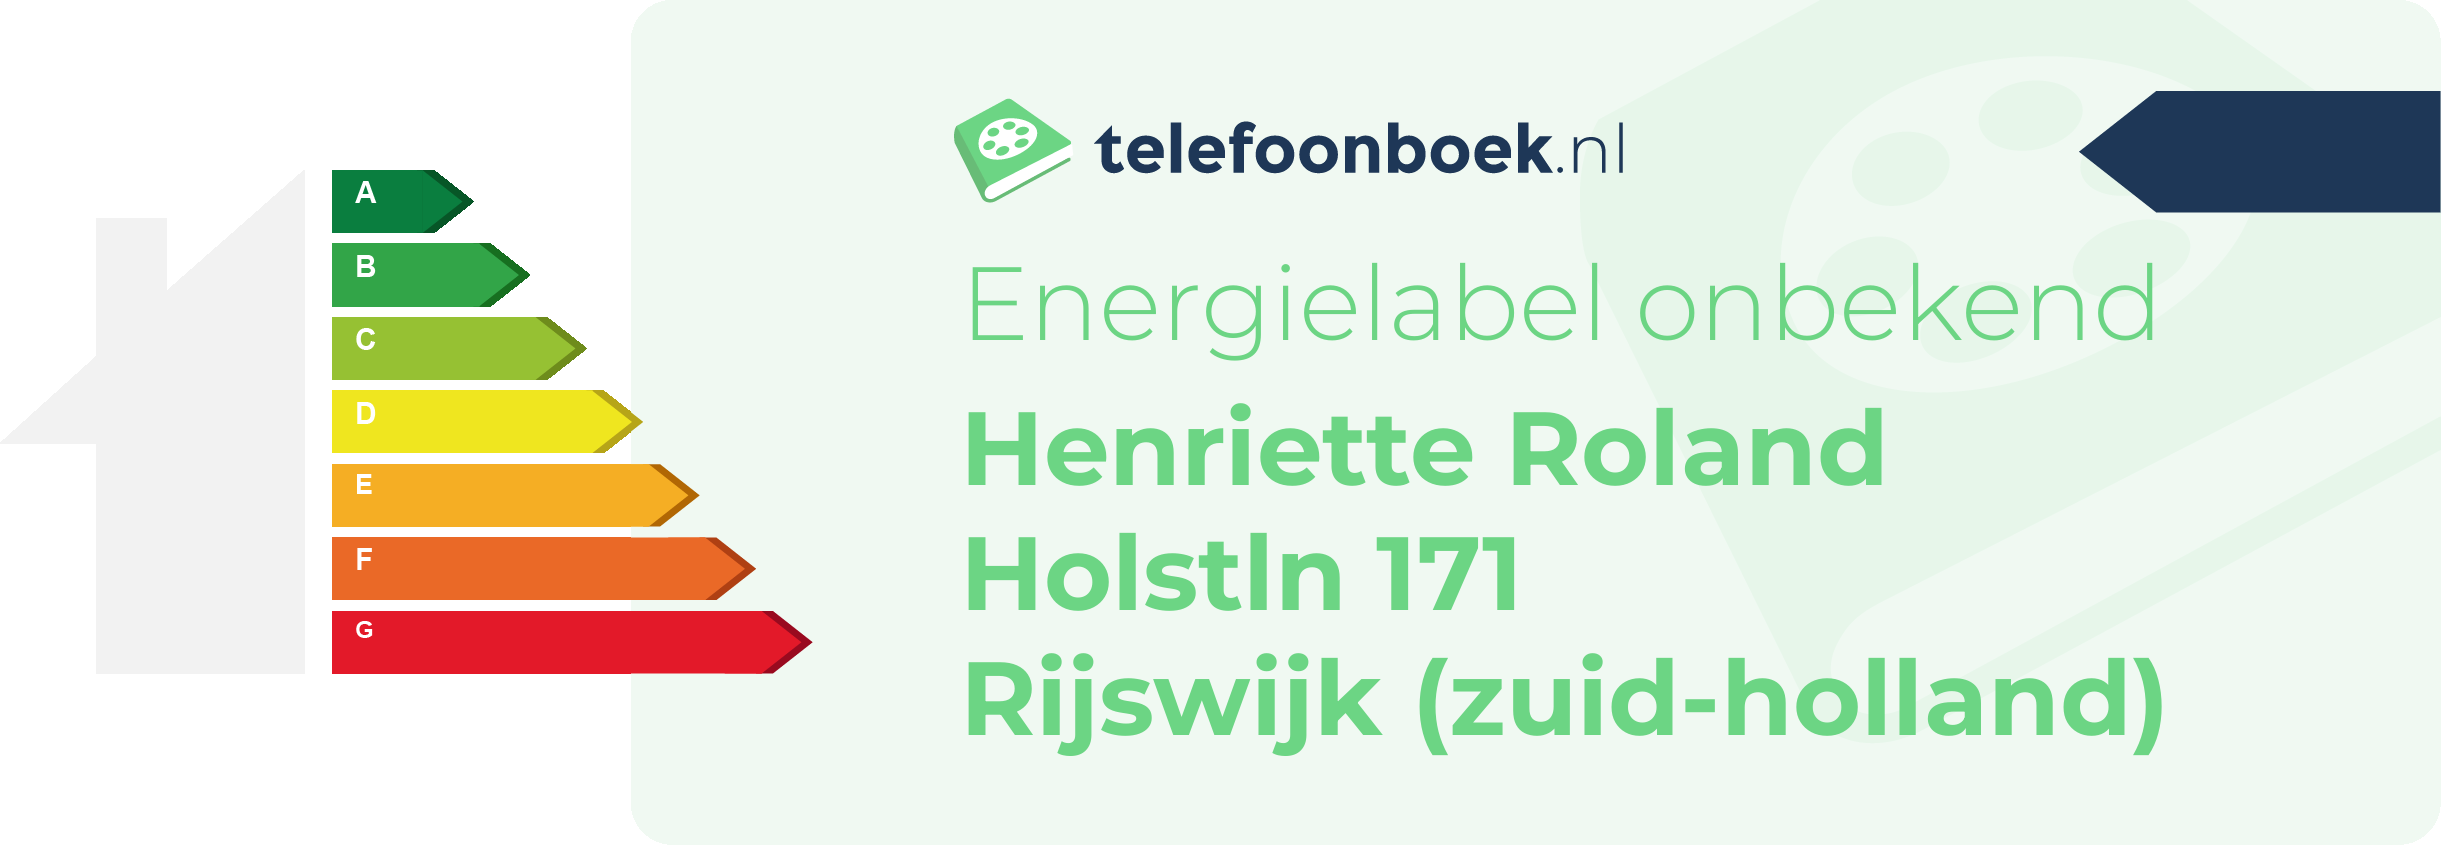 Energielabel Henriette Roland Holstln 171 Rijswijk (Zuid-Holland)